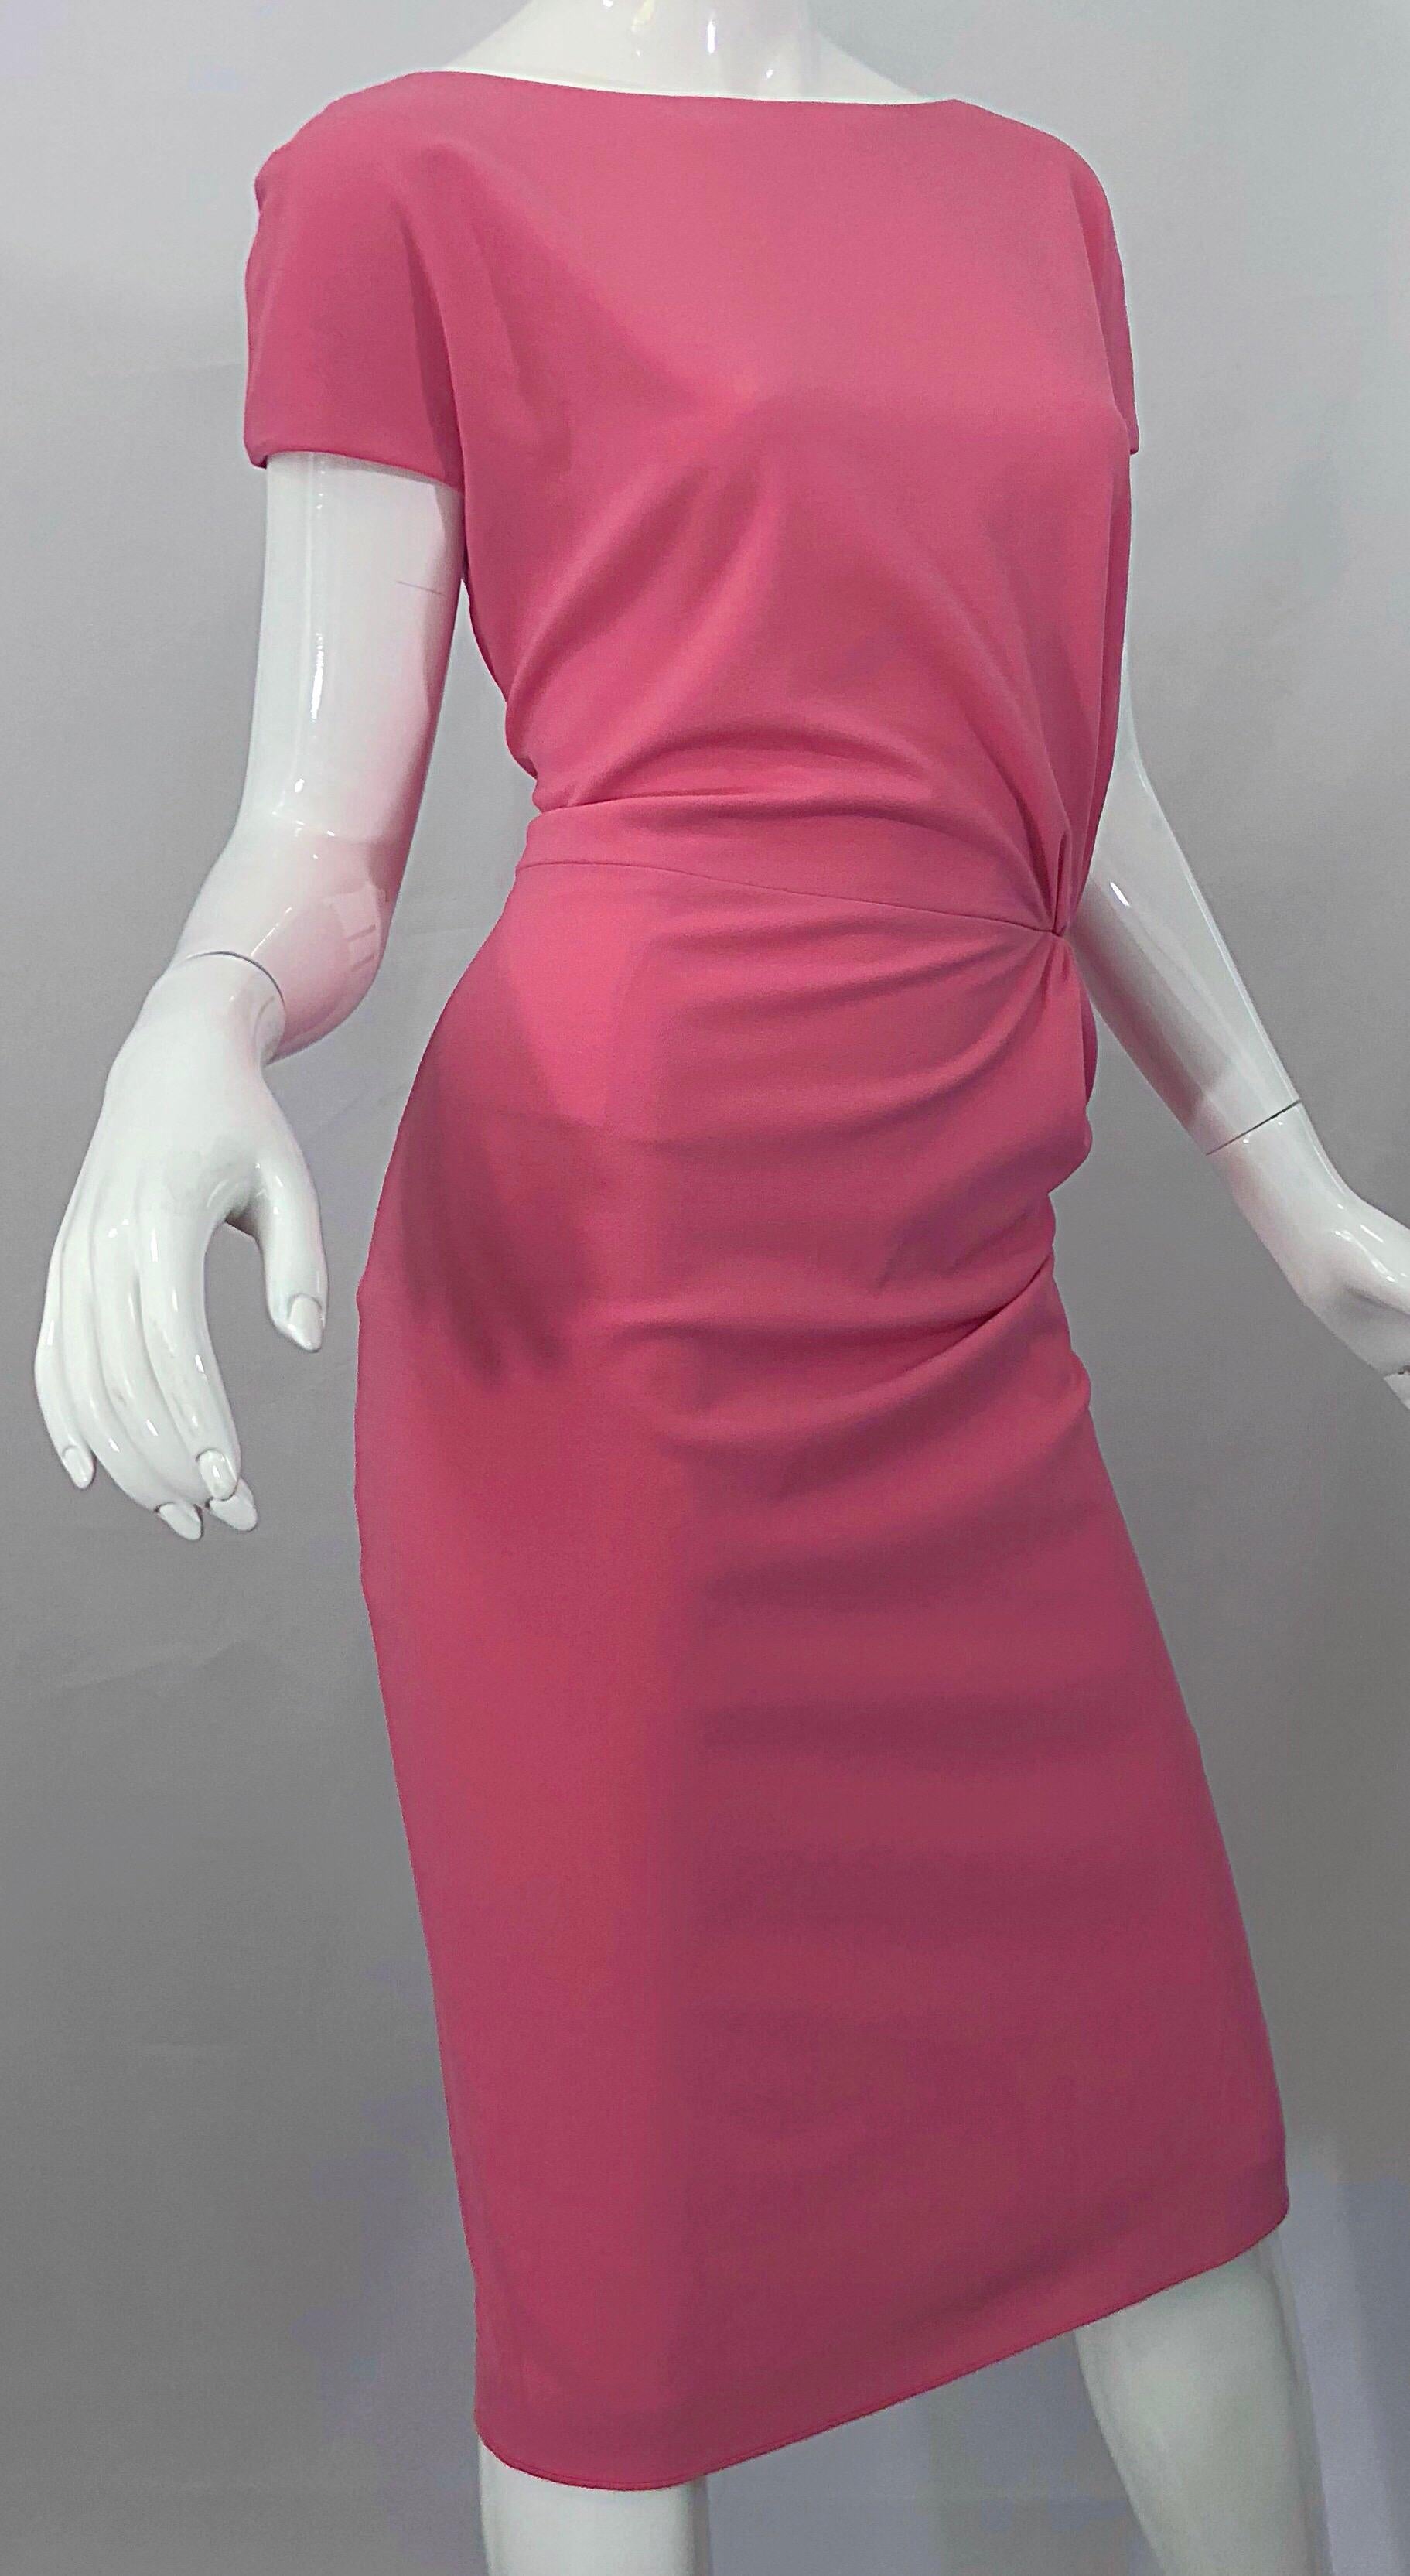 pink dress size 10